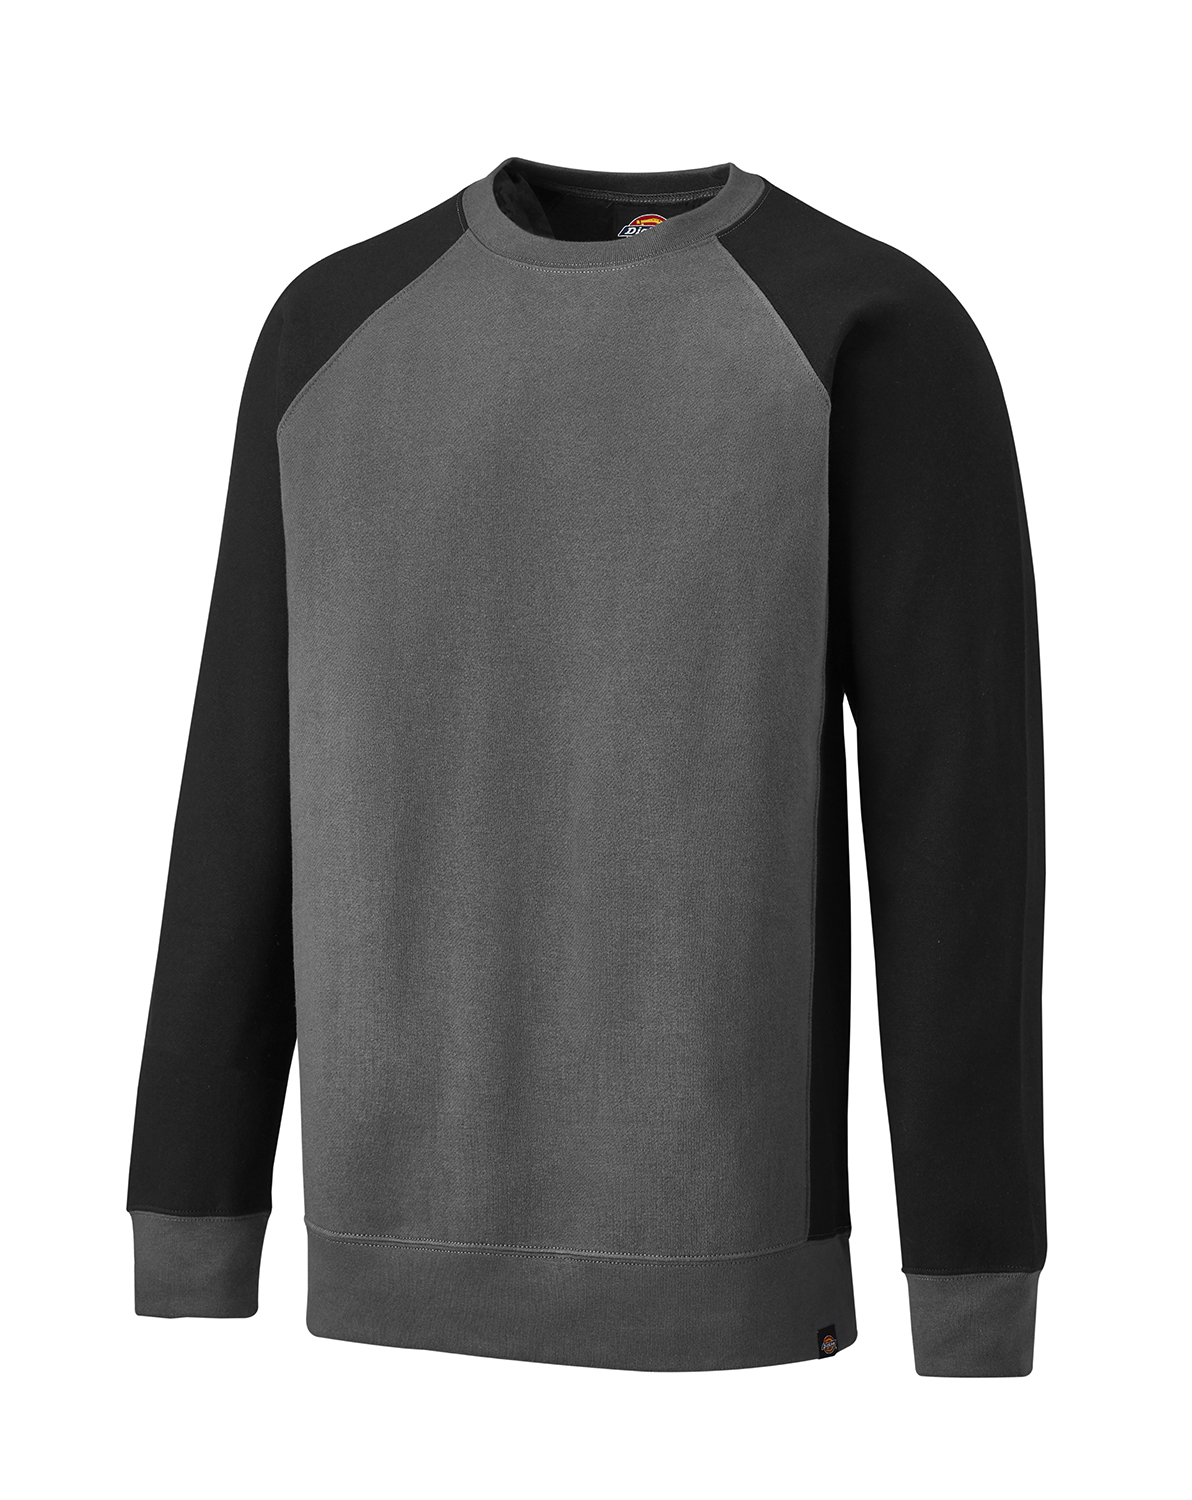 Dickies Unisex Two Tone Sweatshirt, grau/schwarz